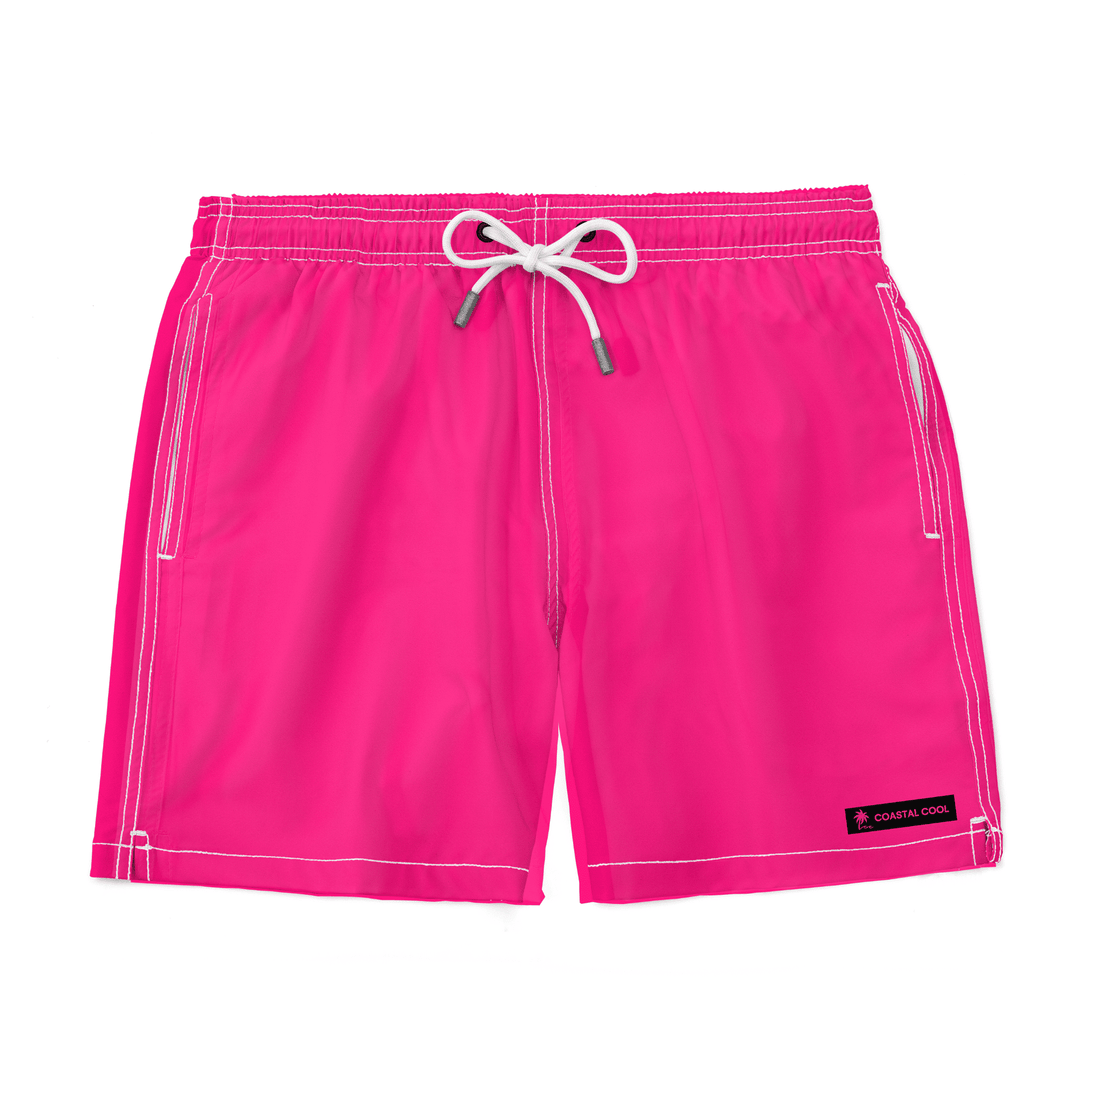 Neon Pink Swim Trunks Swim Trunks Coastal Cool    Sustainable | Recycled | Swimwear | Beachwear | Travel and Vacation | Coastal Cool Swimwear | Coastal Cool Beachwear